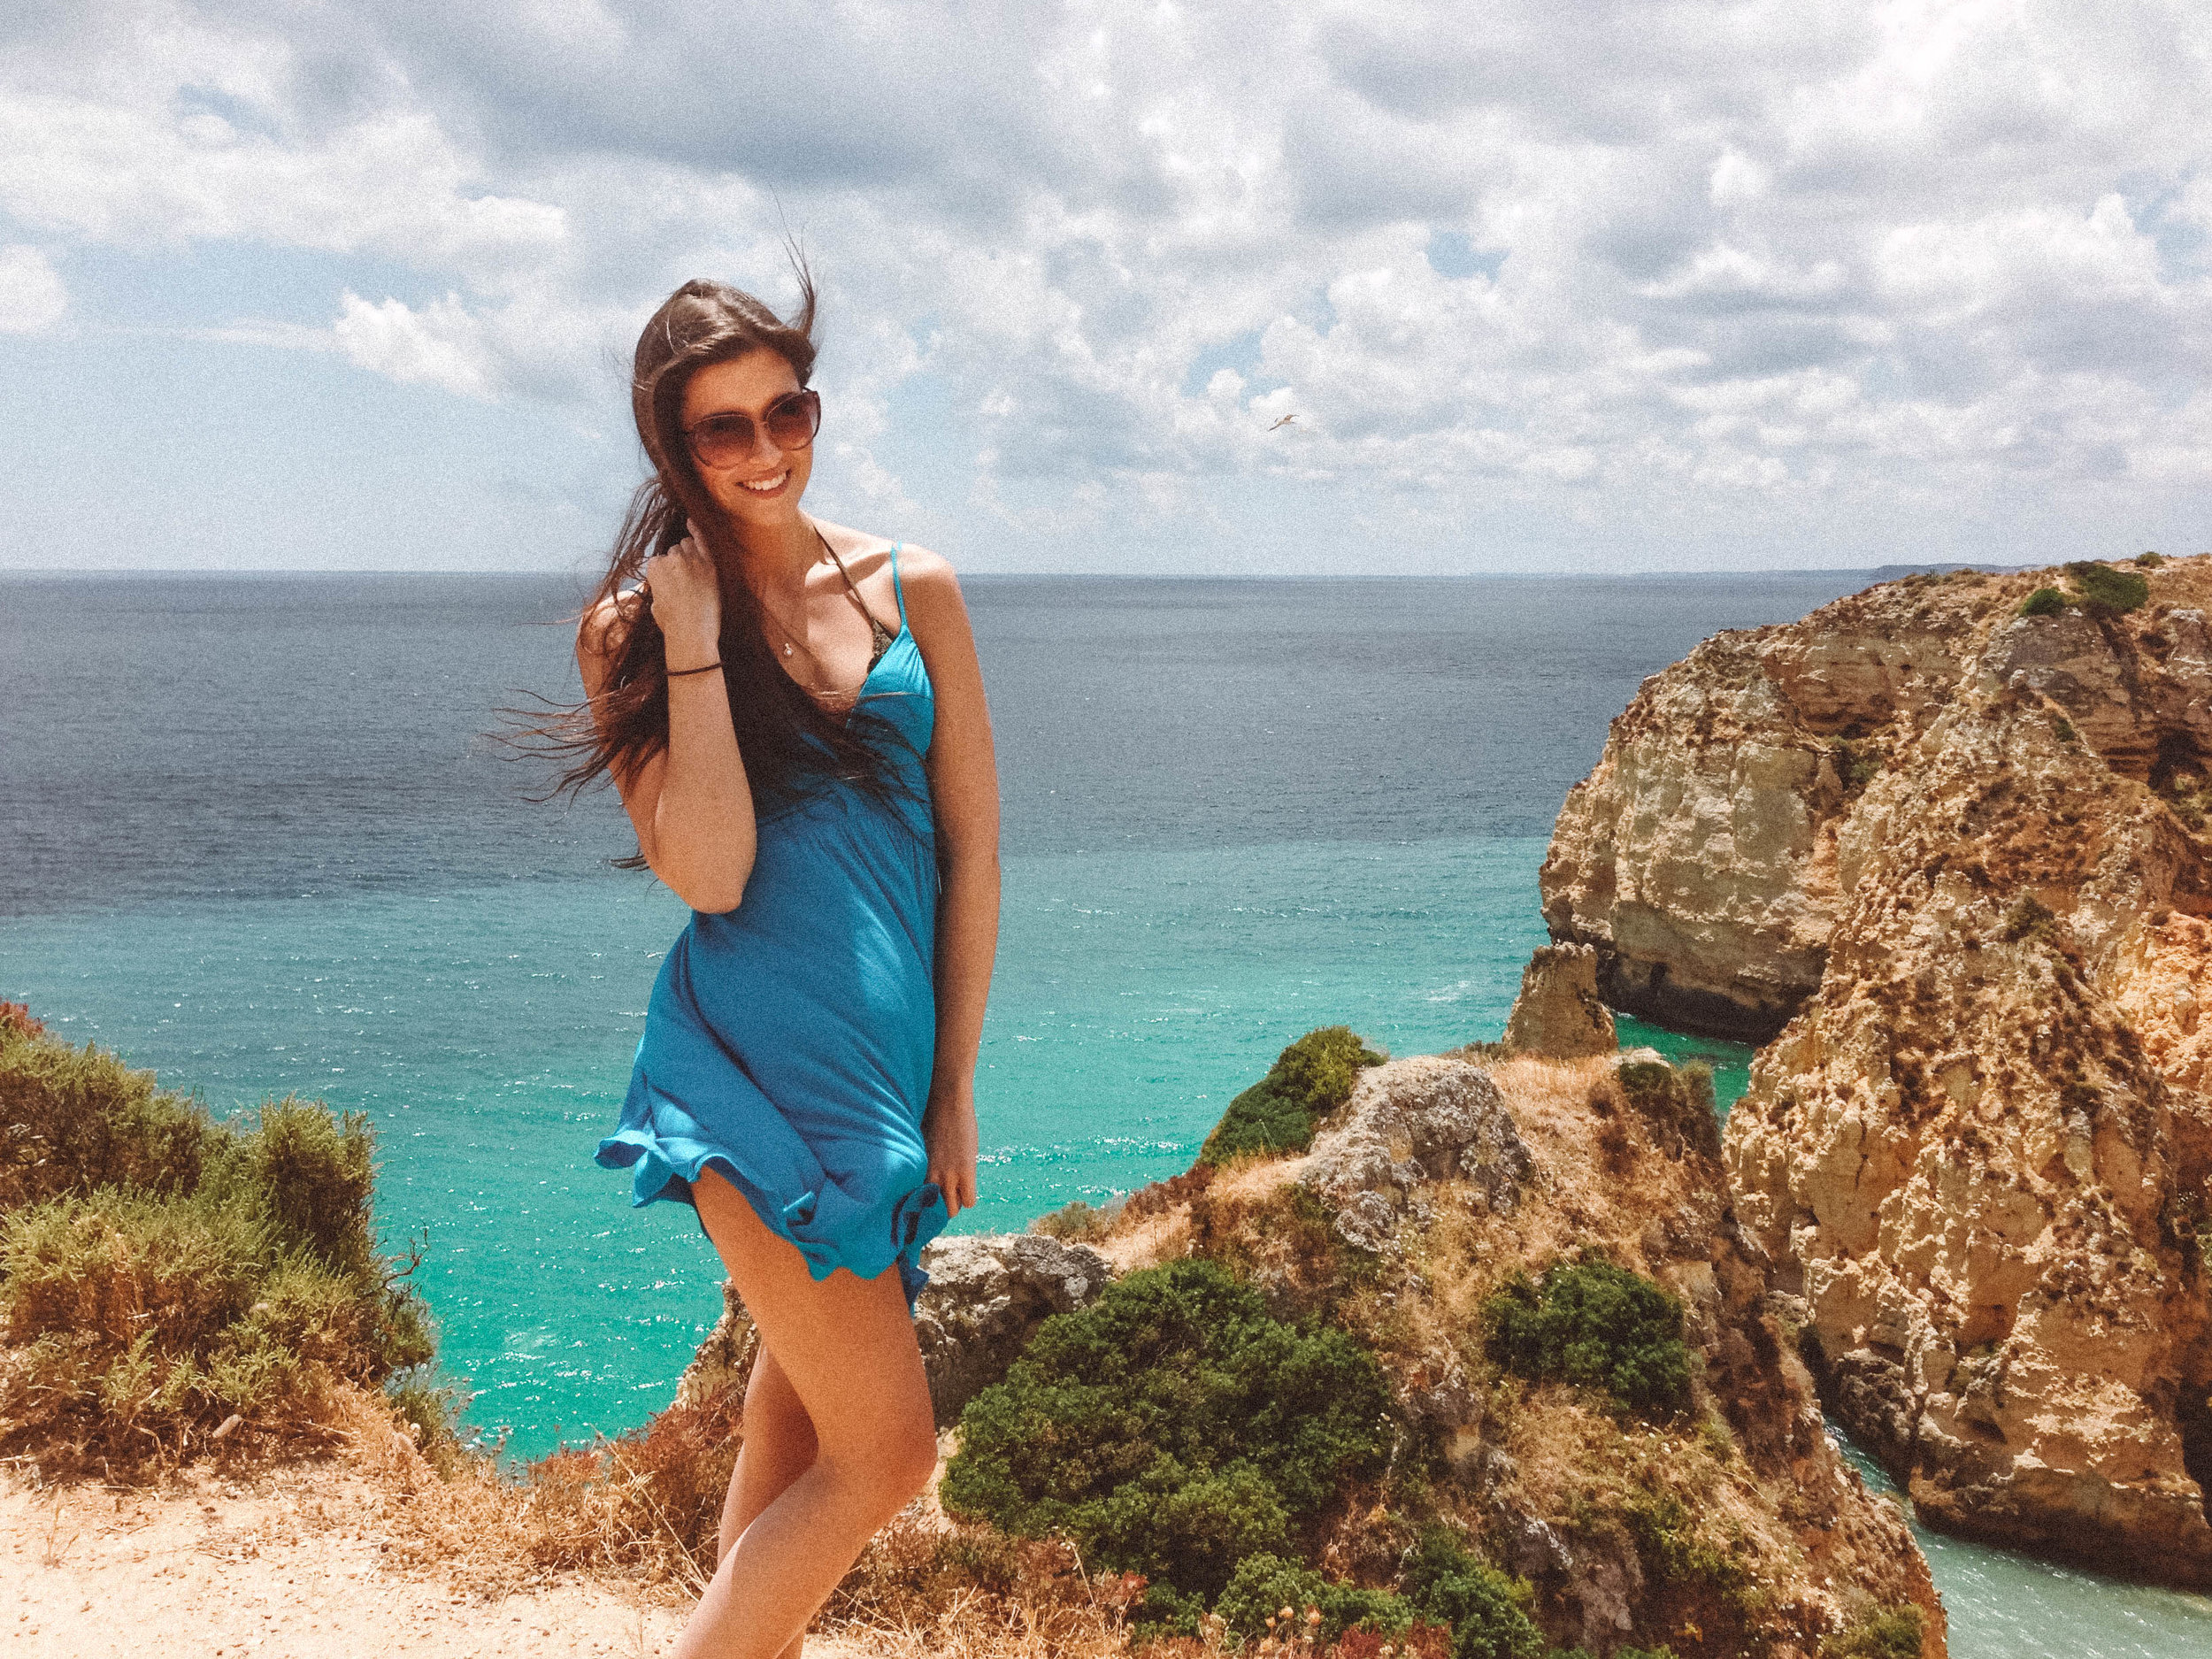 Top of the Cliffs - Lagos - Algarve - Portugal